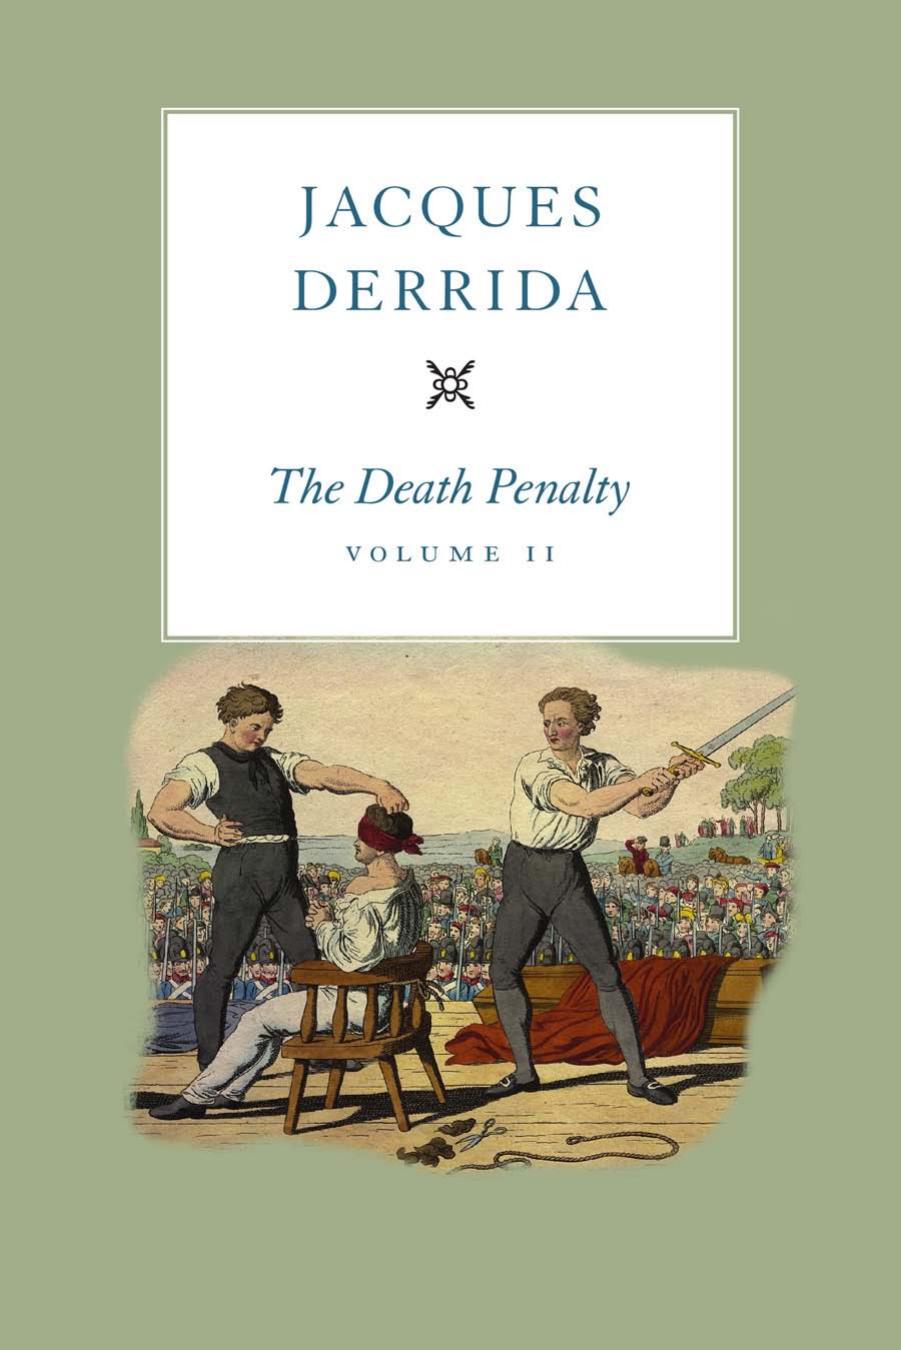 The Death Penalty, Volume II